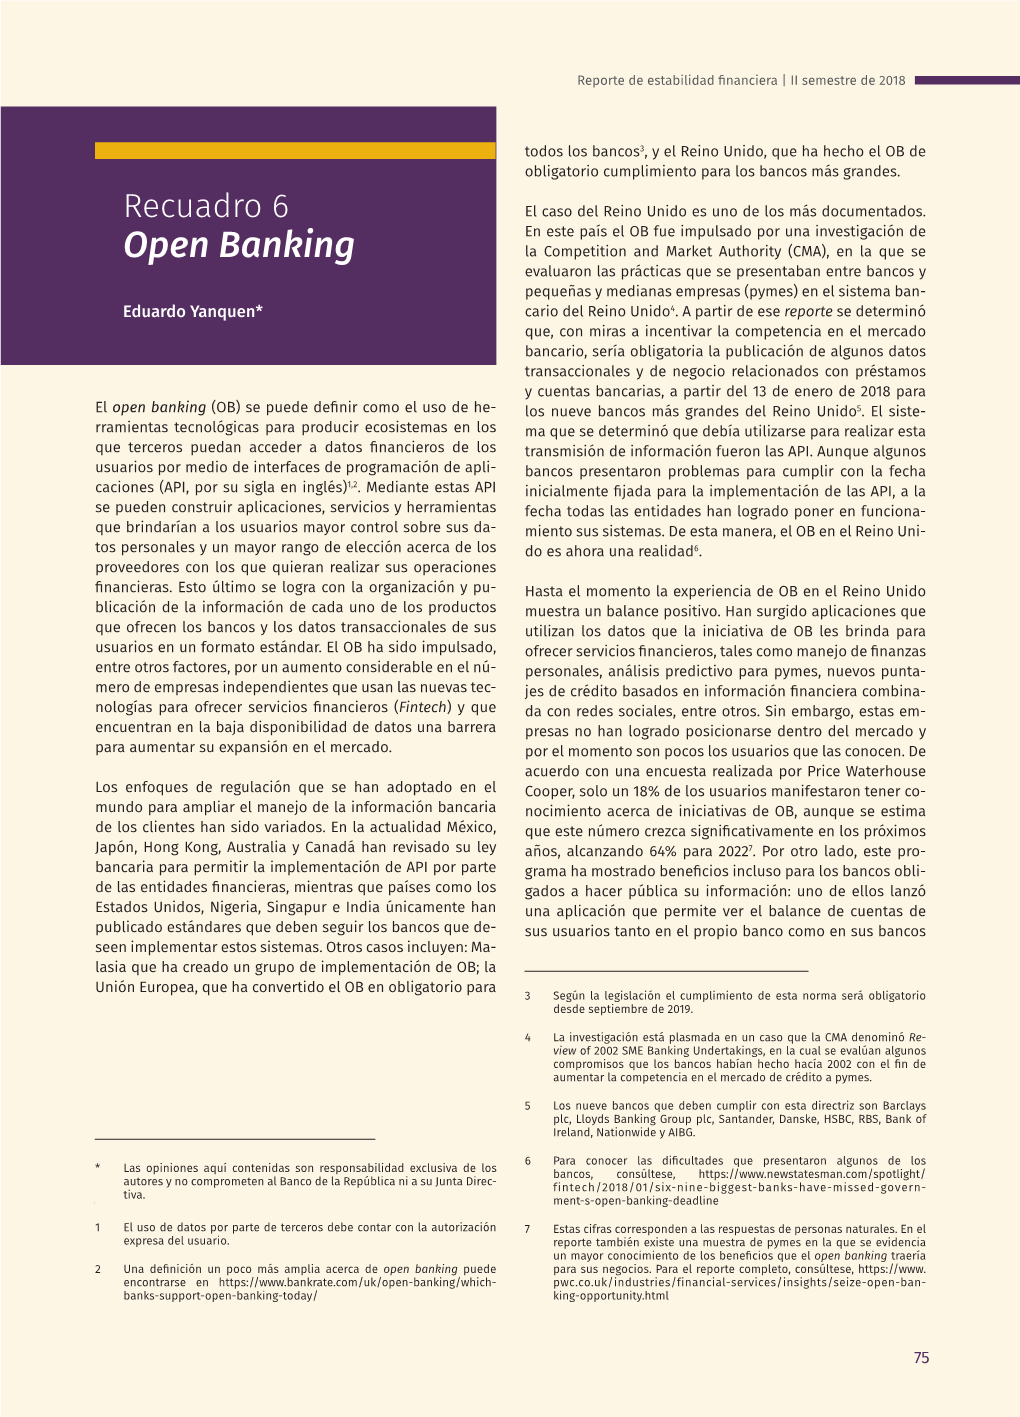 Recuadro 6. Open Banking